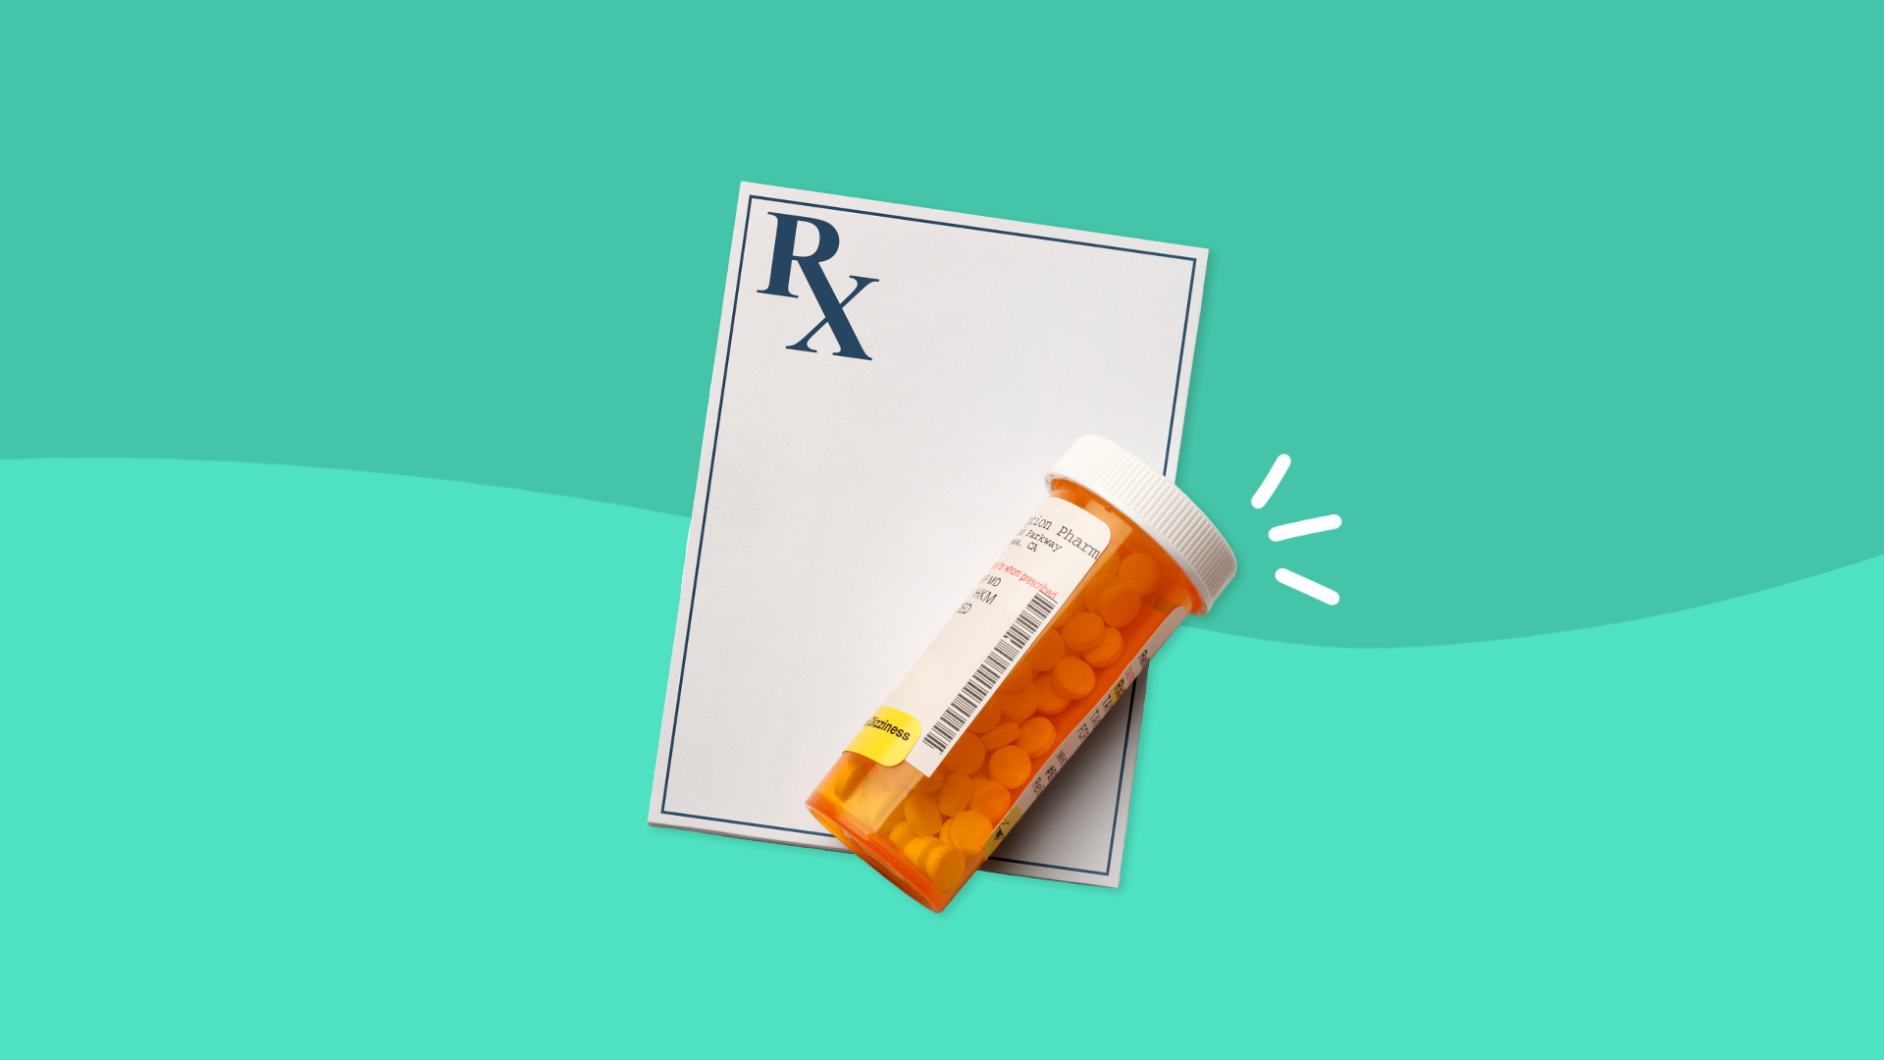 Durogesic Full Prescribing Information, Dosage & Side Effects